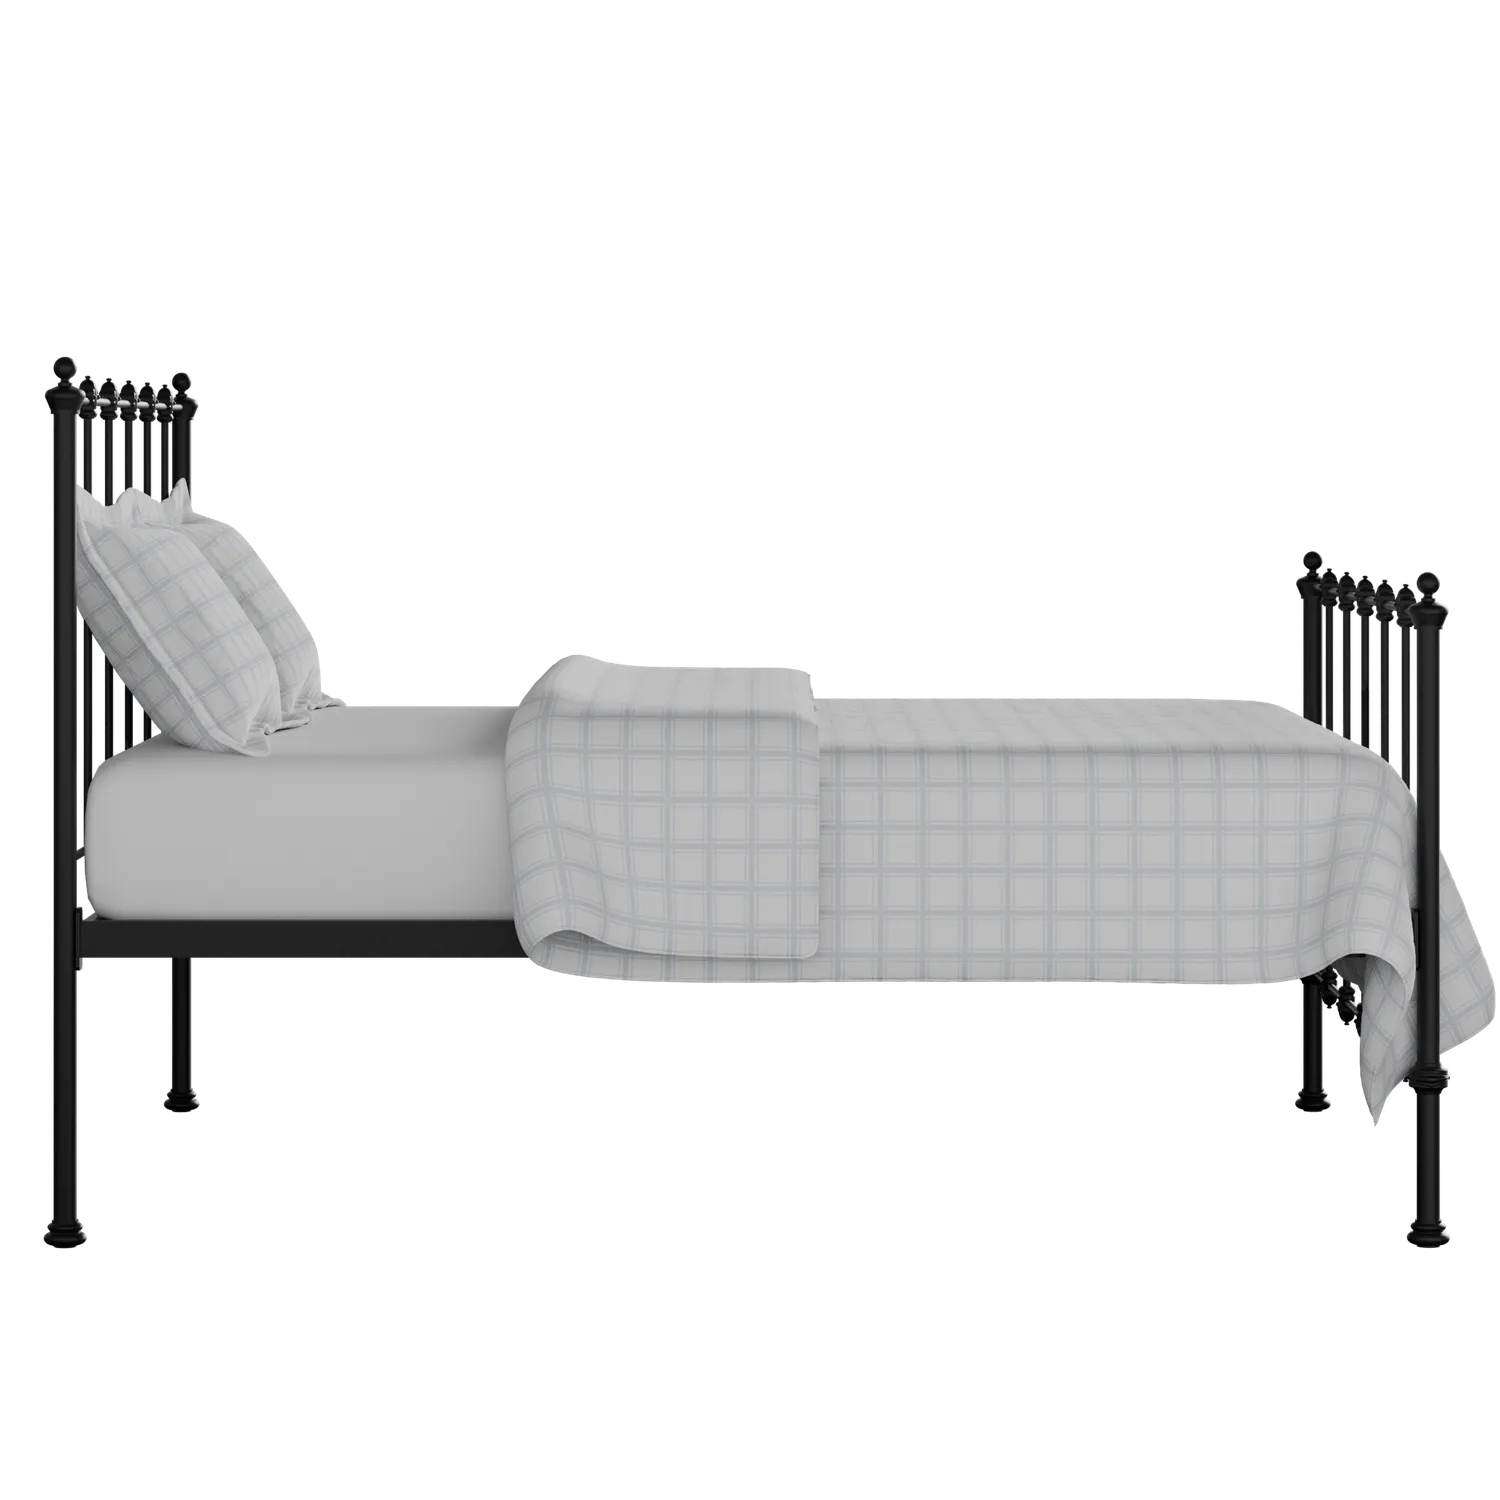 Paris iron/metal bed in black with Juno mattress